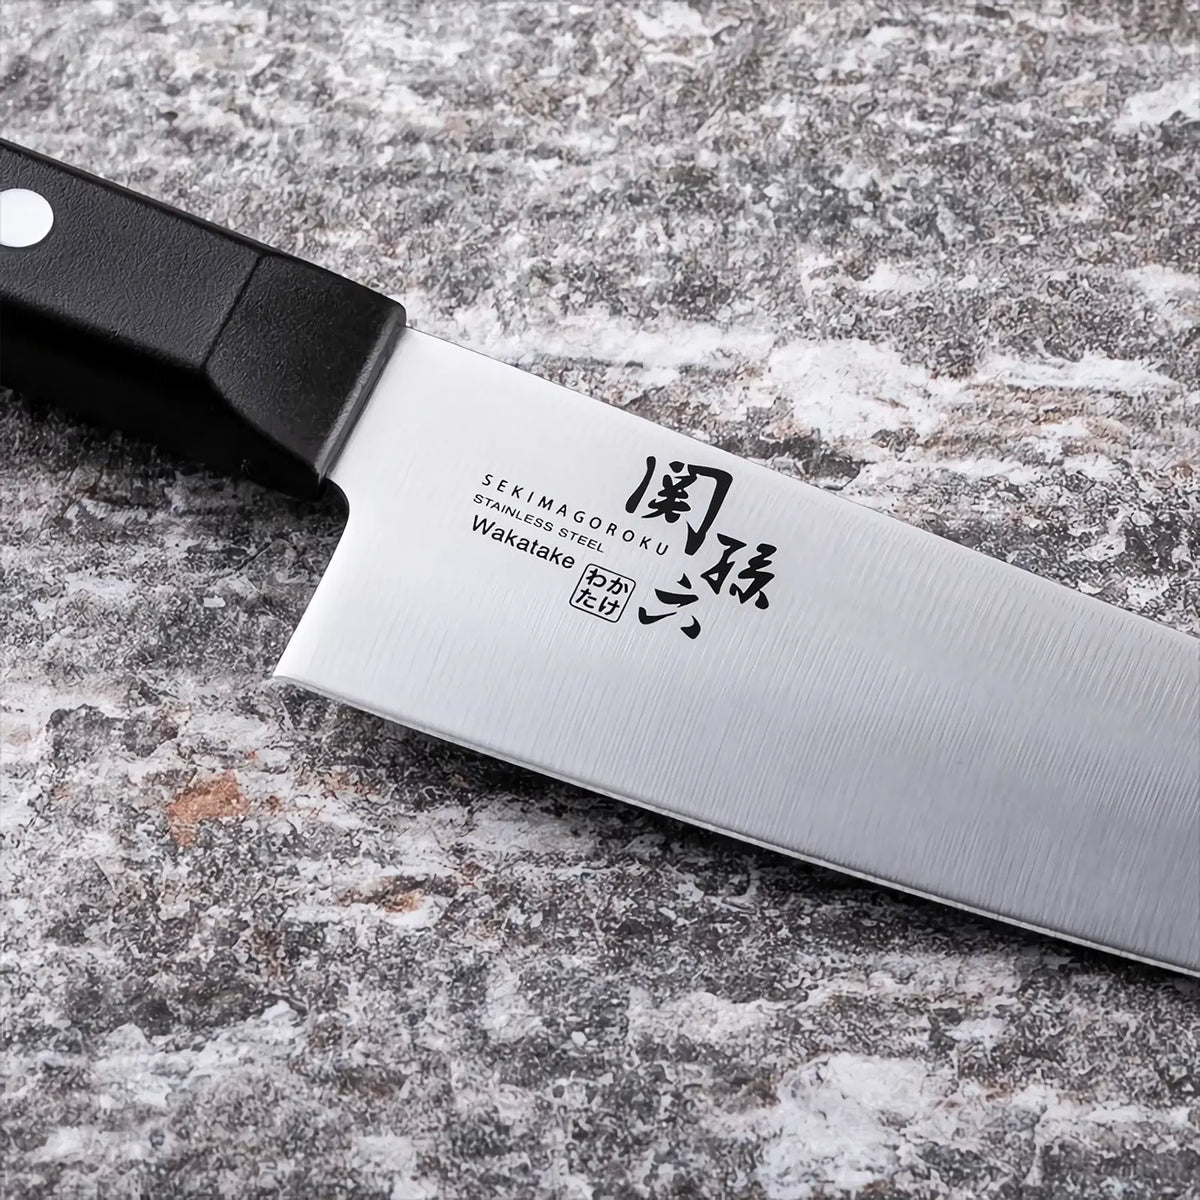 Seki Magoroku Wakatake Stainless Steel Gyuto Knife